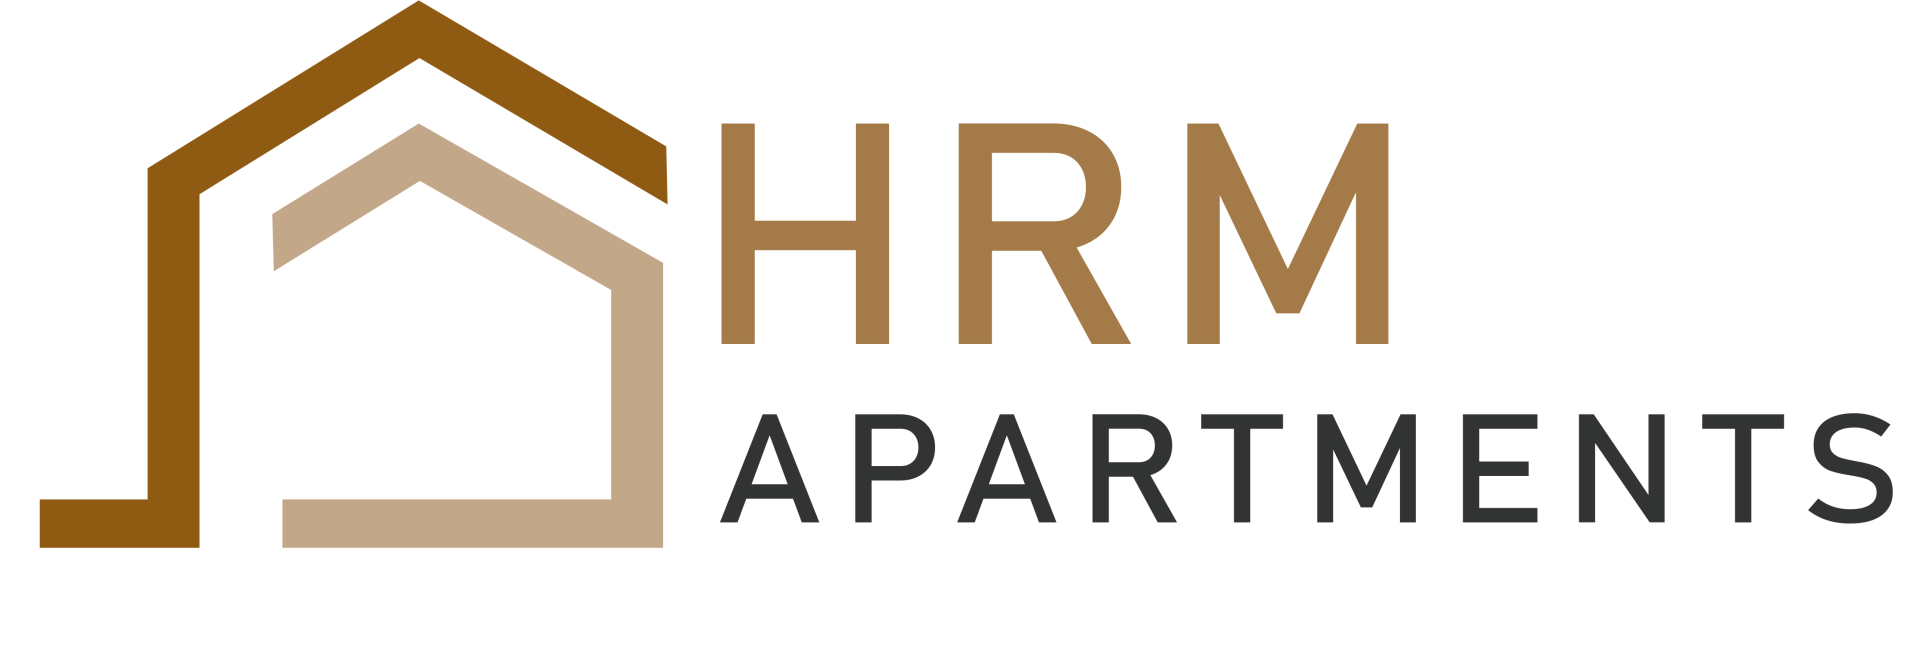 HRM Apartments Logo